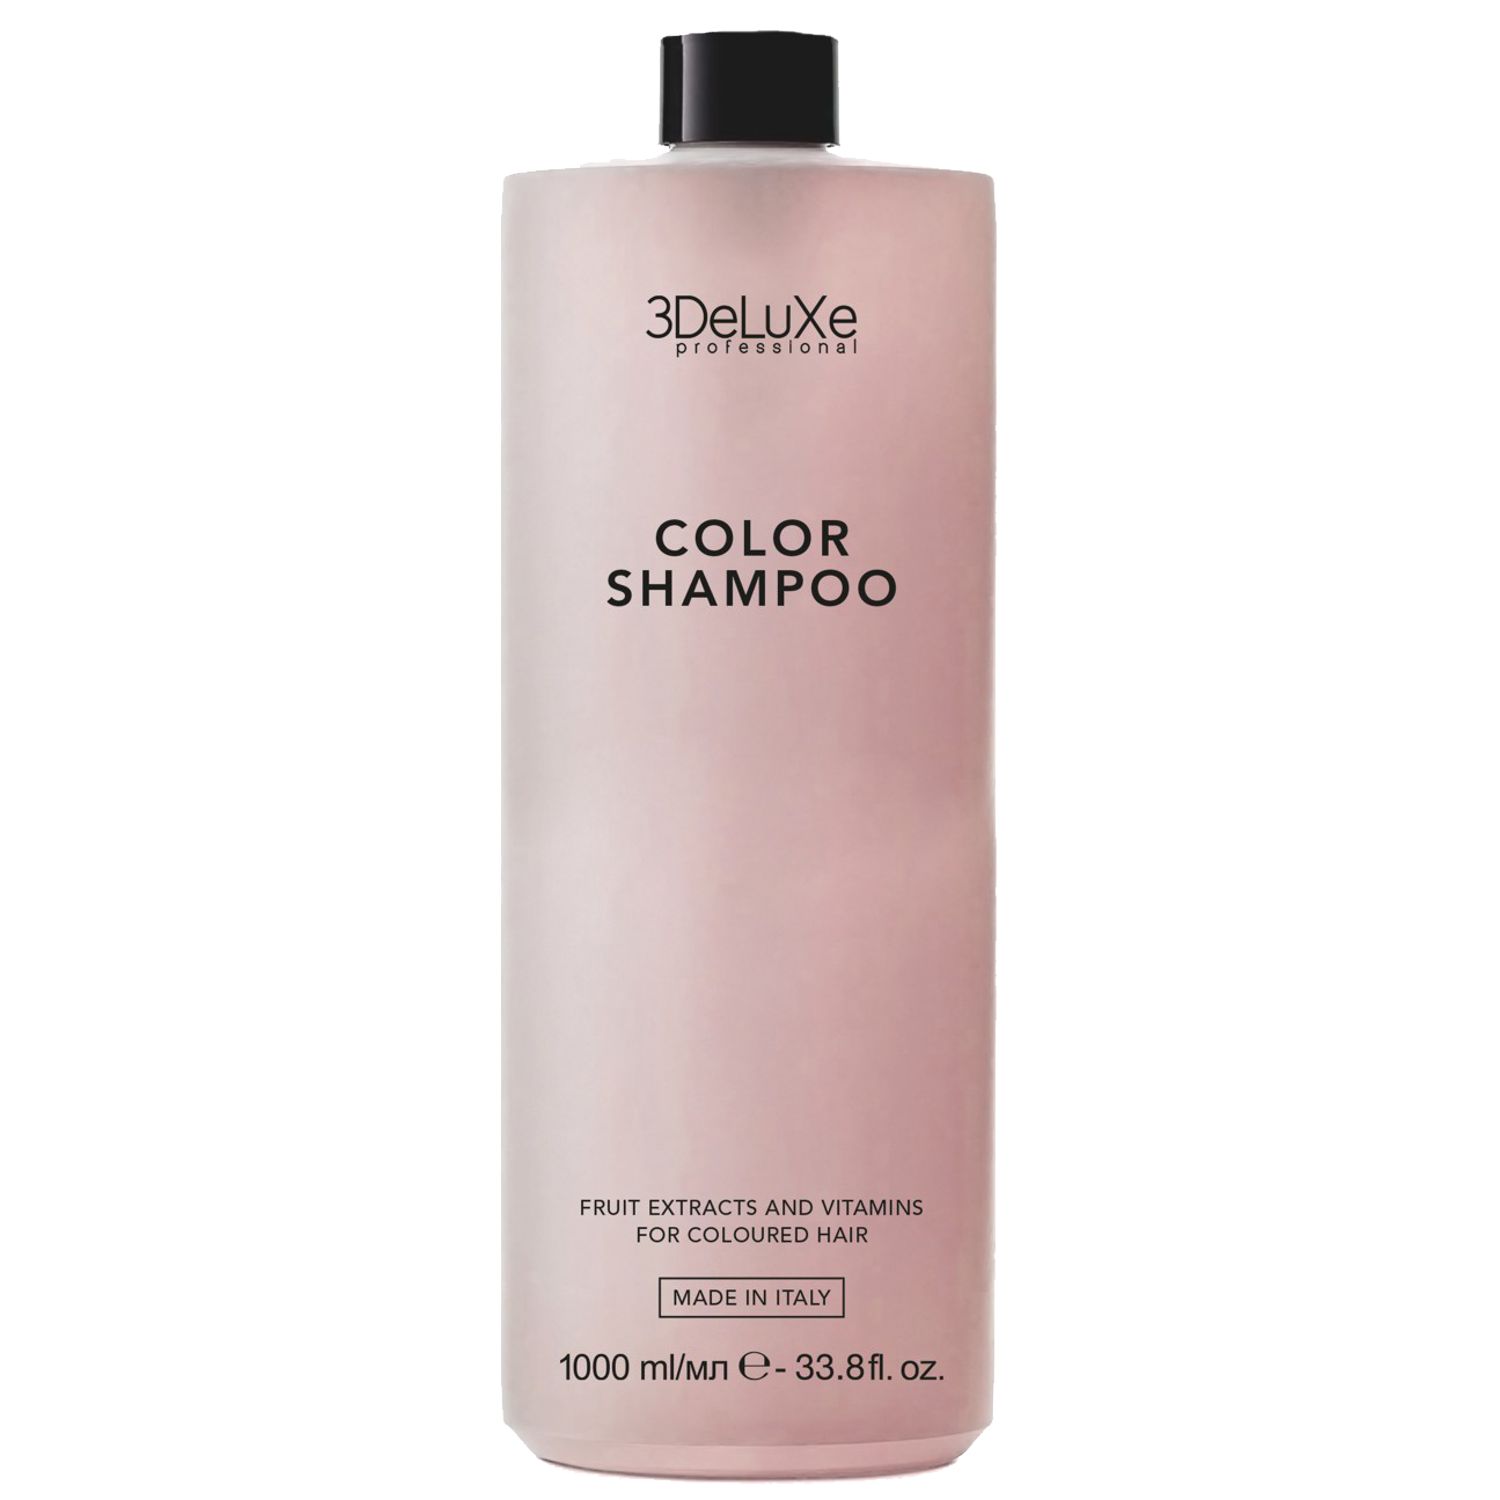 3DeLuXe Professional COLOR Shampoo 1 L